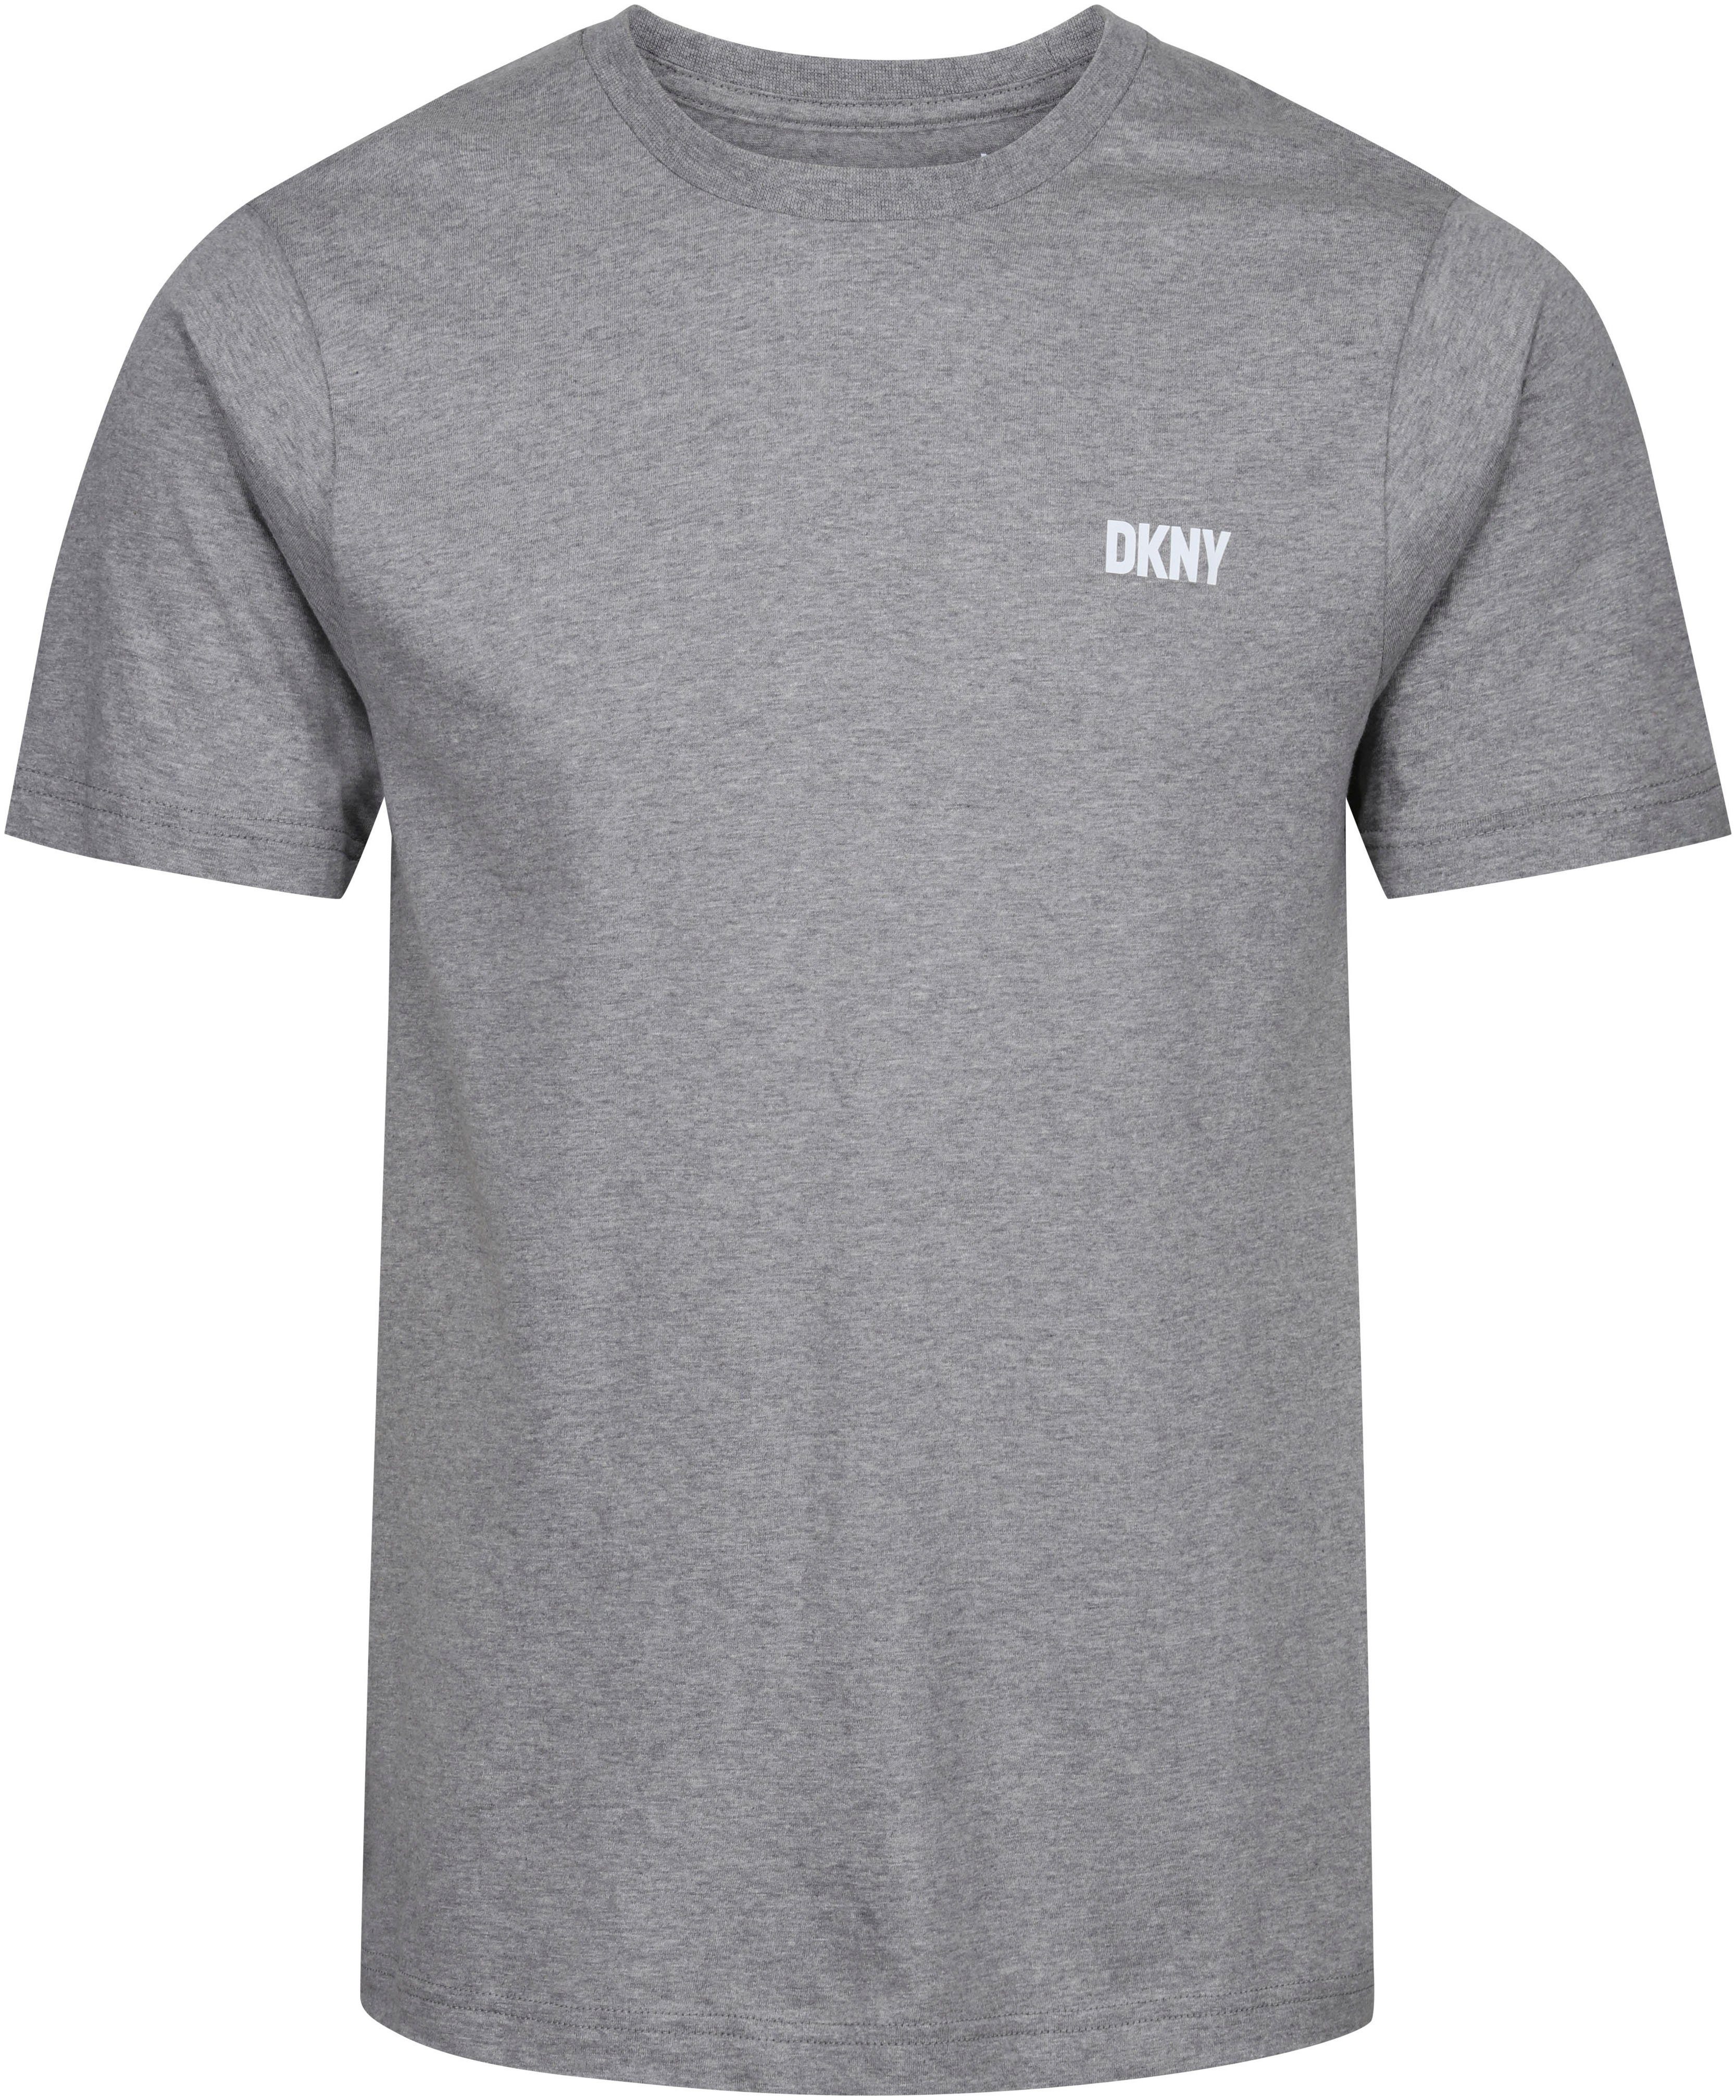 black/white/ T-Shirt DKNY GIANTS